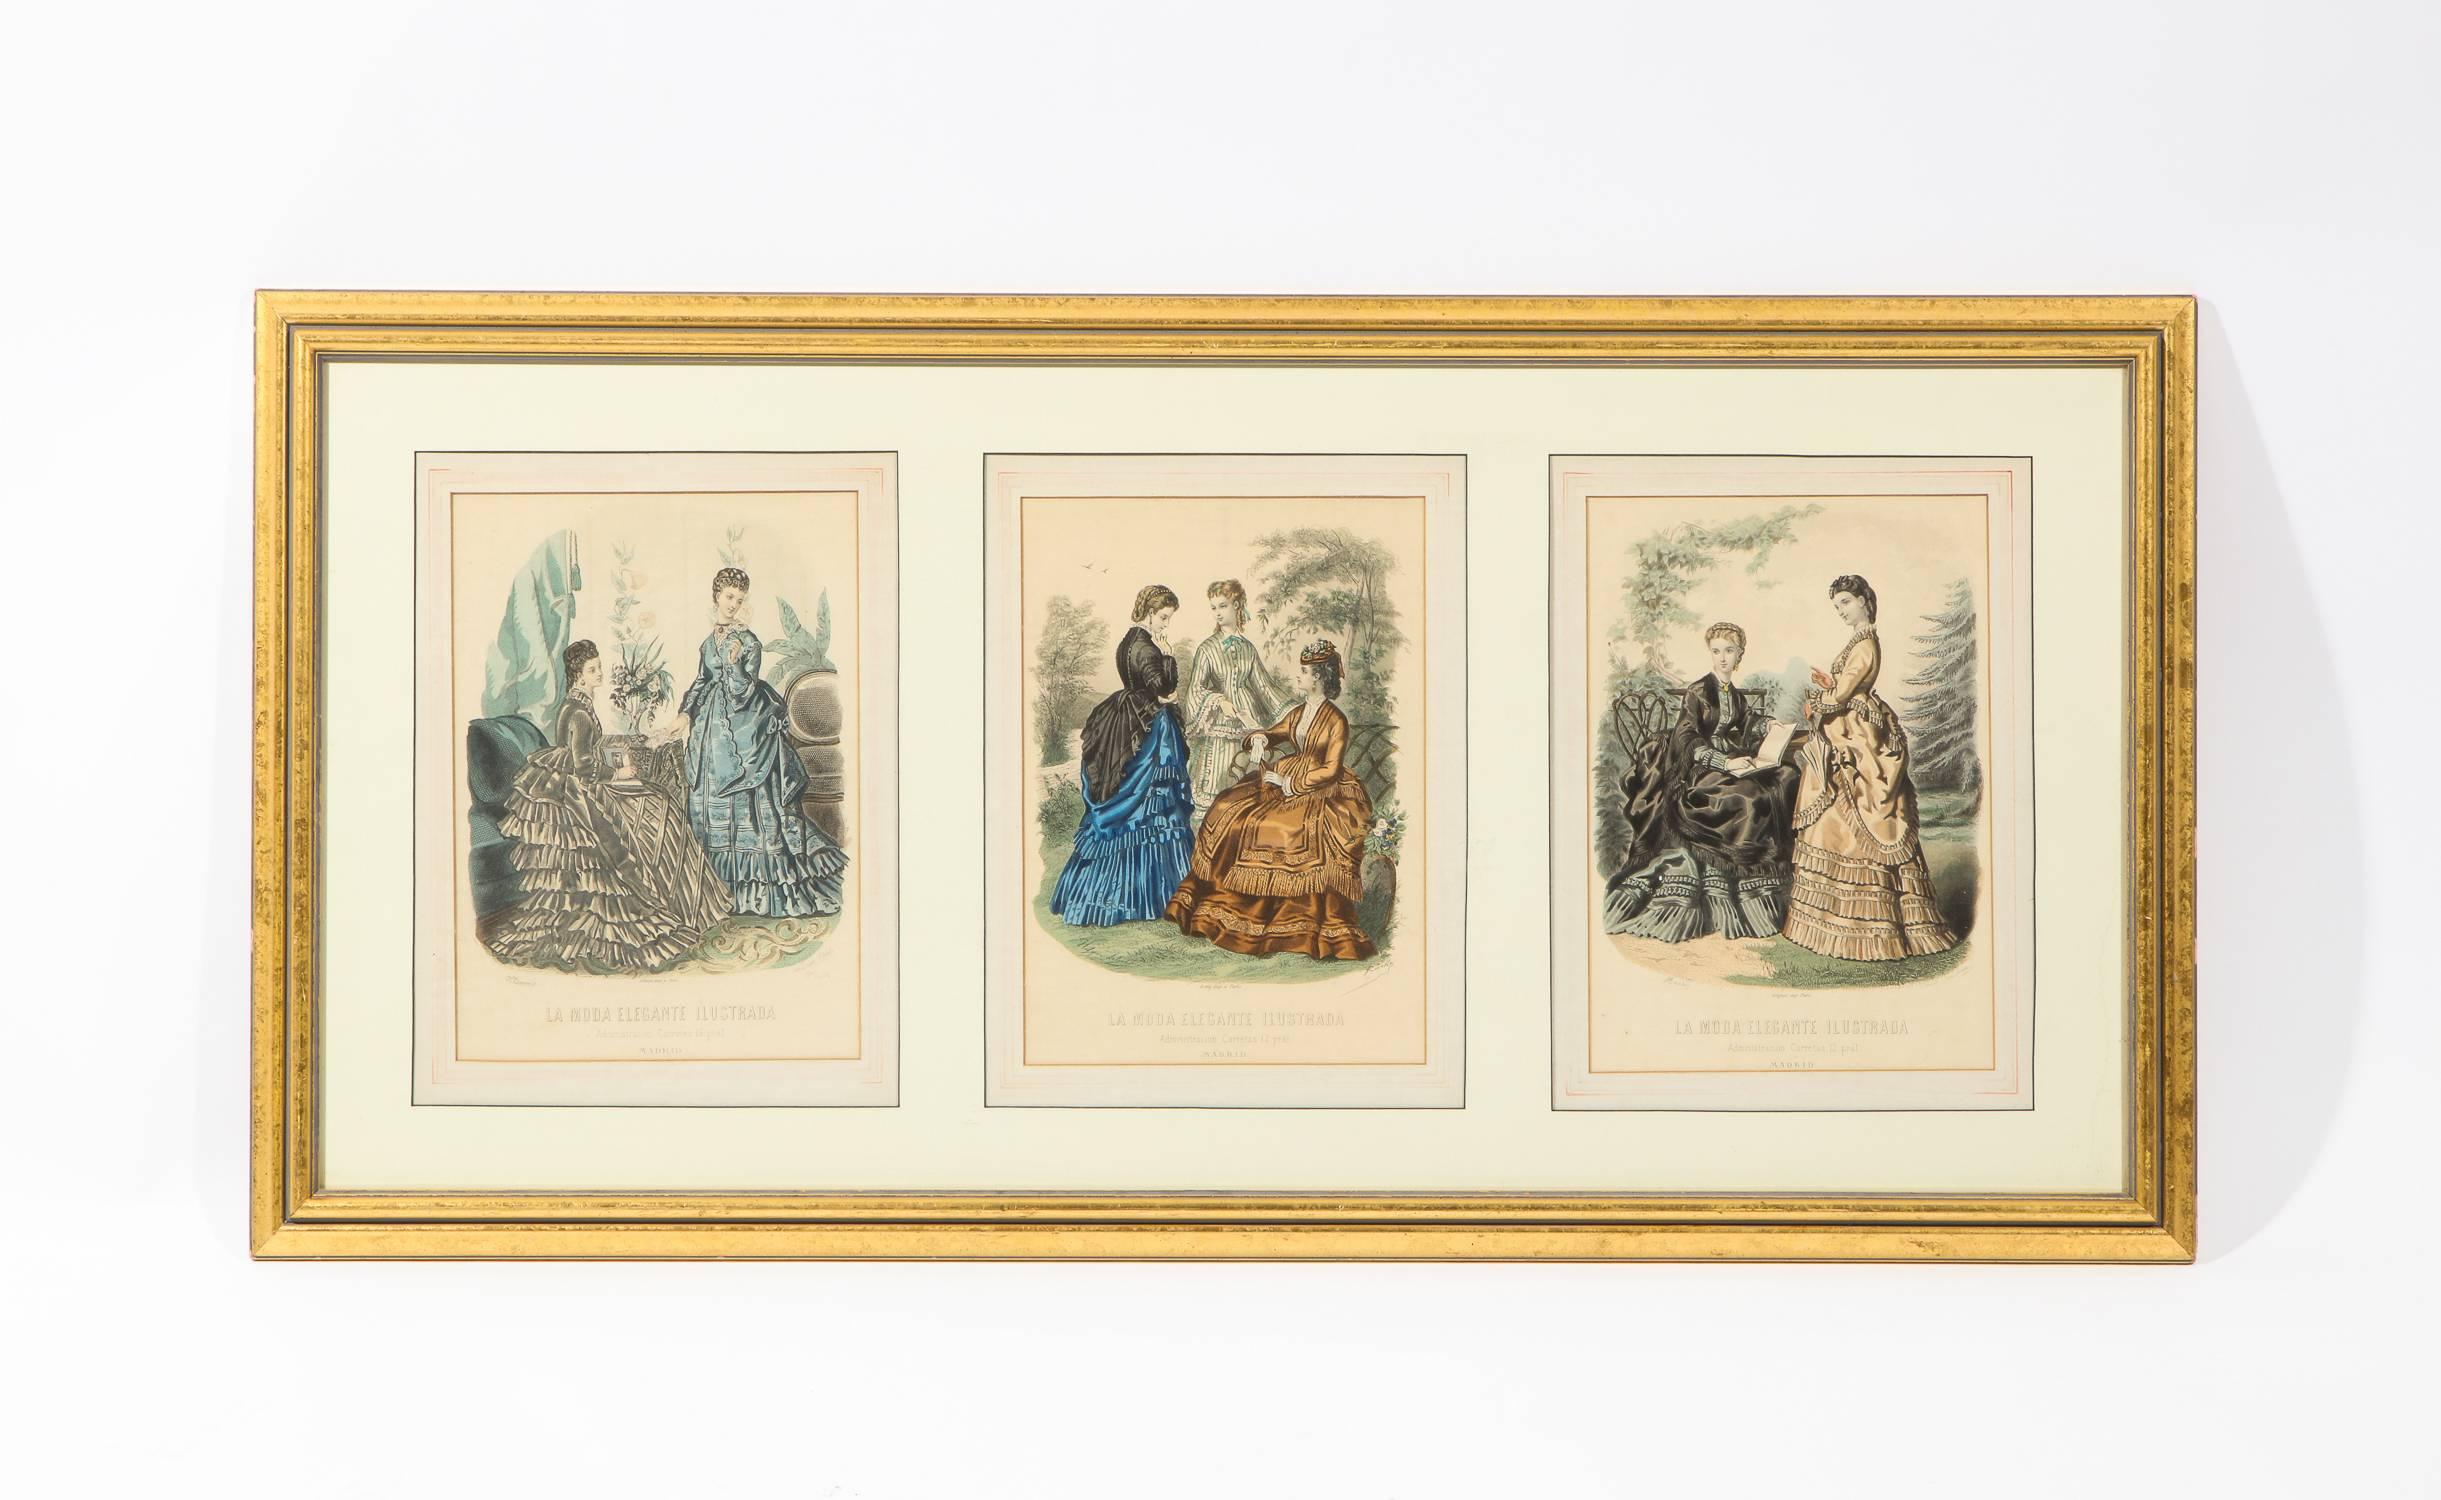 Antique 19th century Spanish fashion prints in giltwood frame, pair 

La Moda Elegante Ilustrada

Madrid.